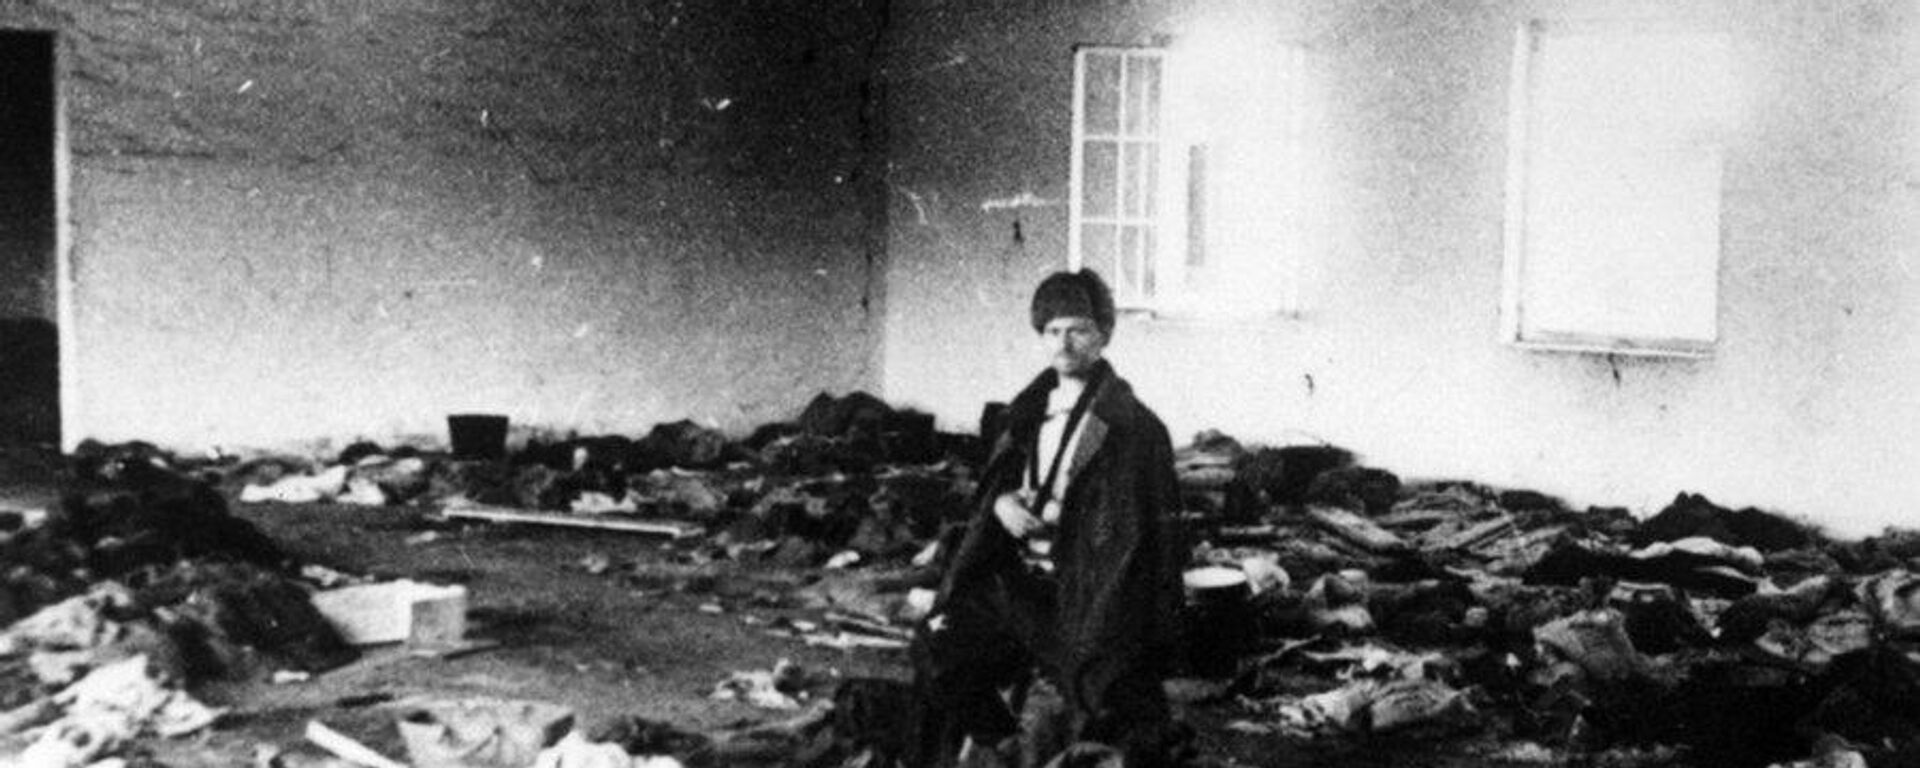 Campo de exterminio nazi liberado por la Unión Soviética en 1945. - Sputnik Mundo, 1920, 11.05.2022